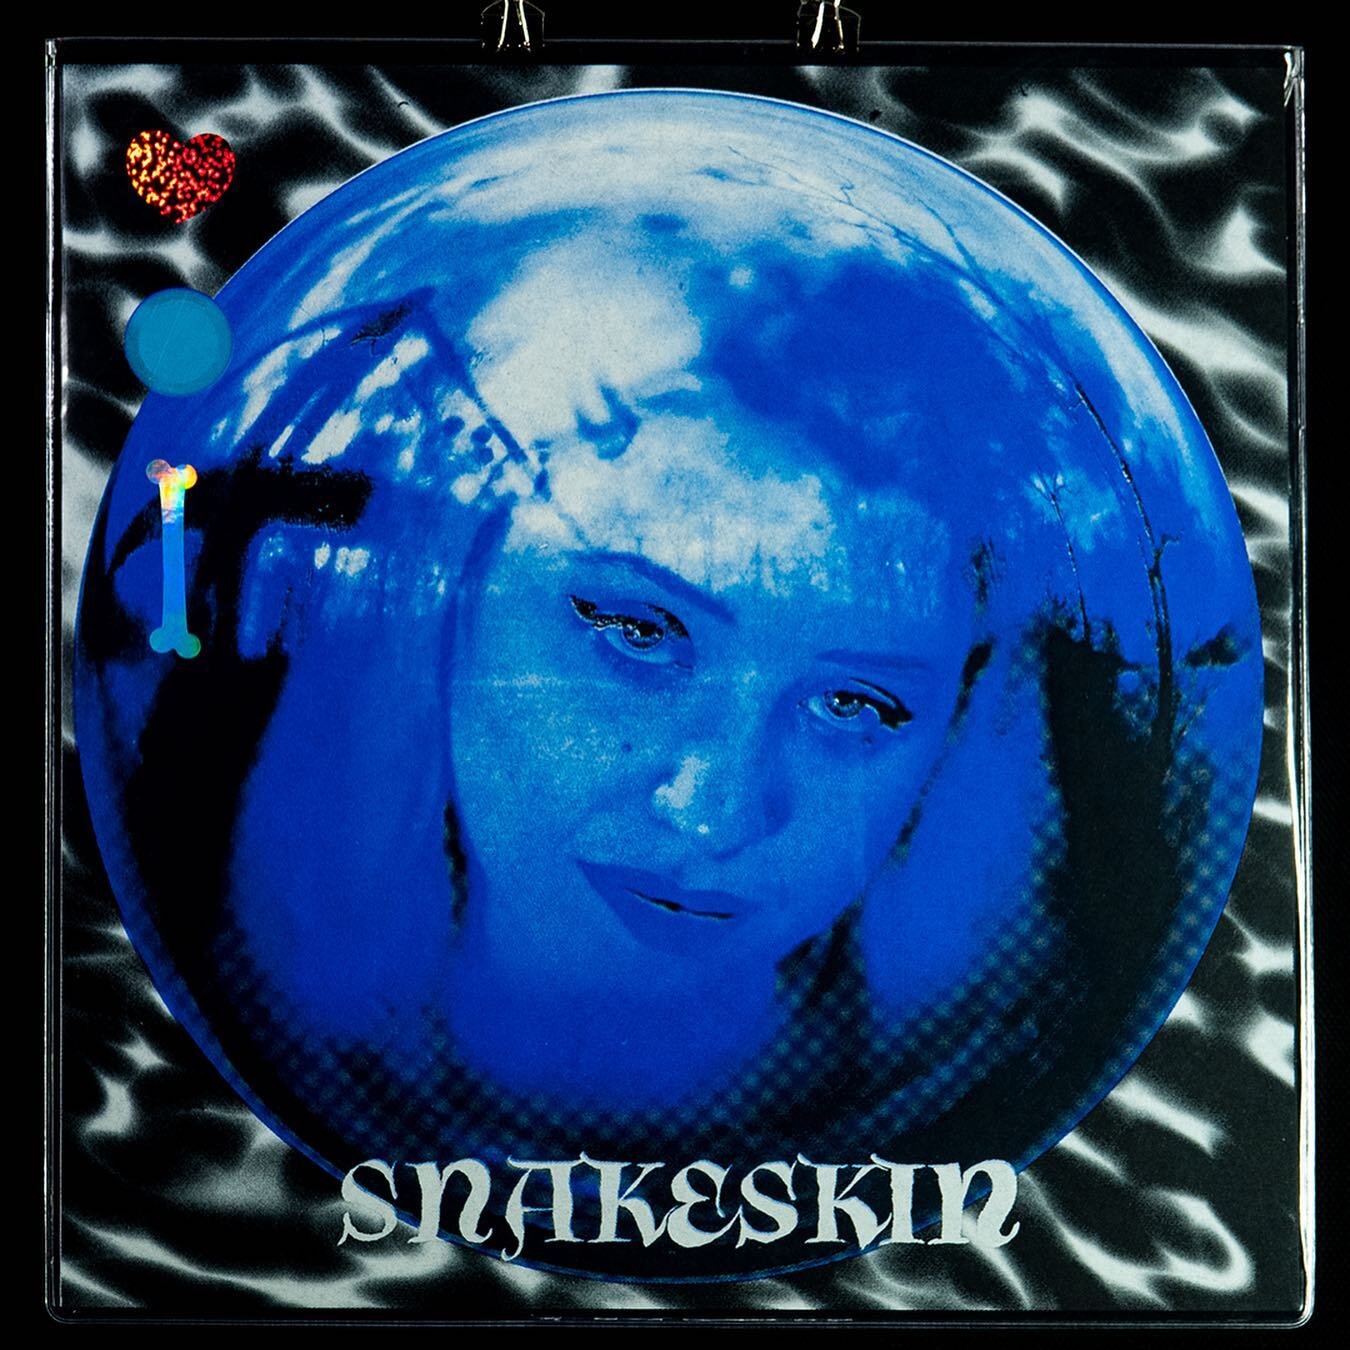 Snakeskin - Heart Orb Bone EP
Out July 13